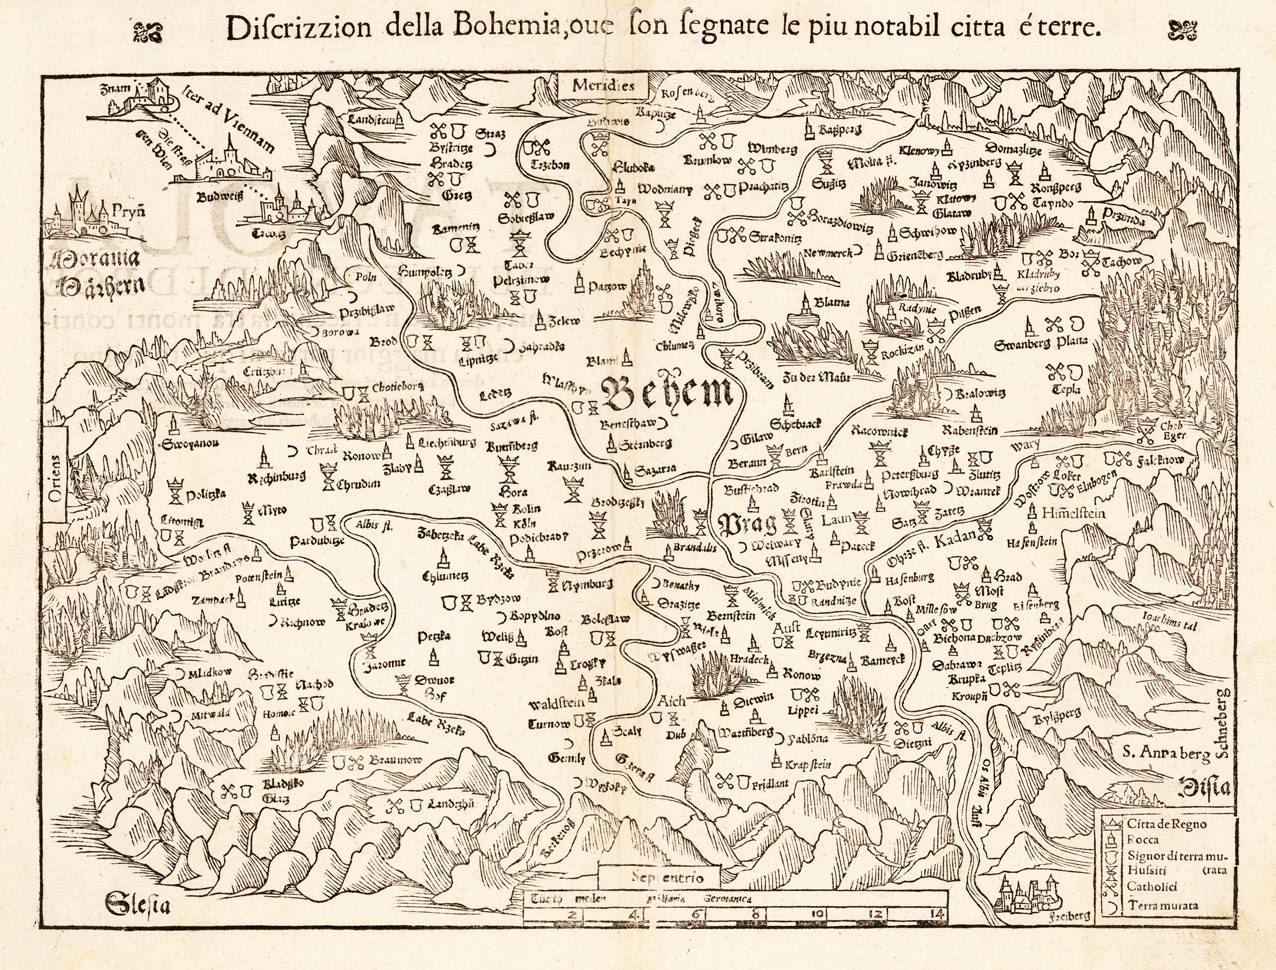 Basel, Petri H. rok 1575, - podle Klaudyána